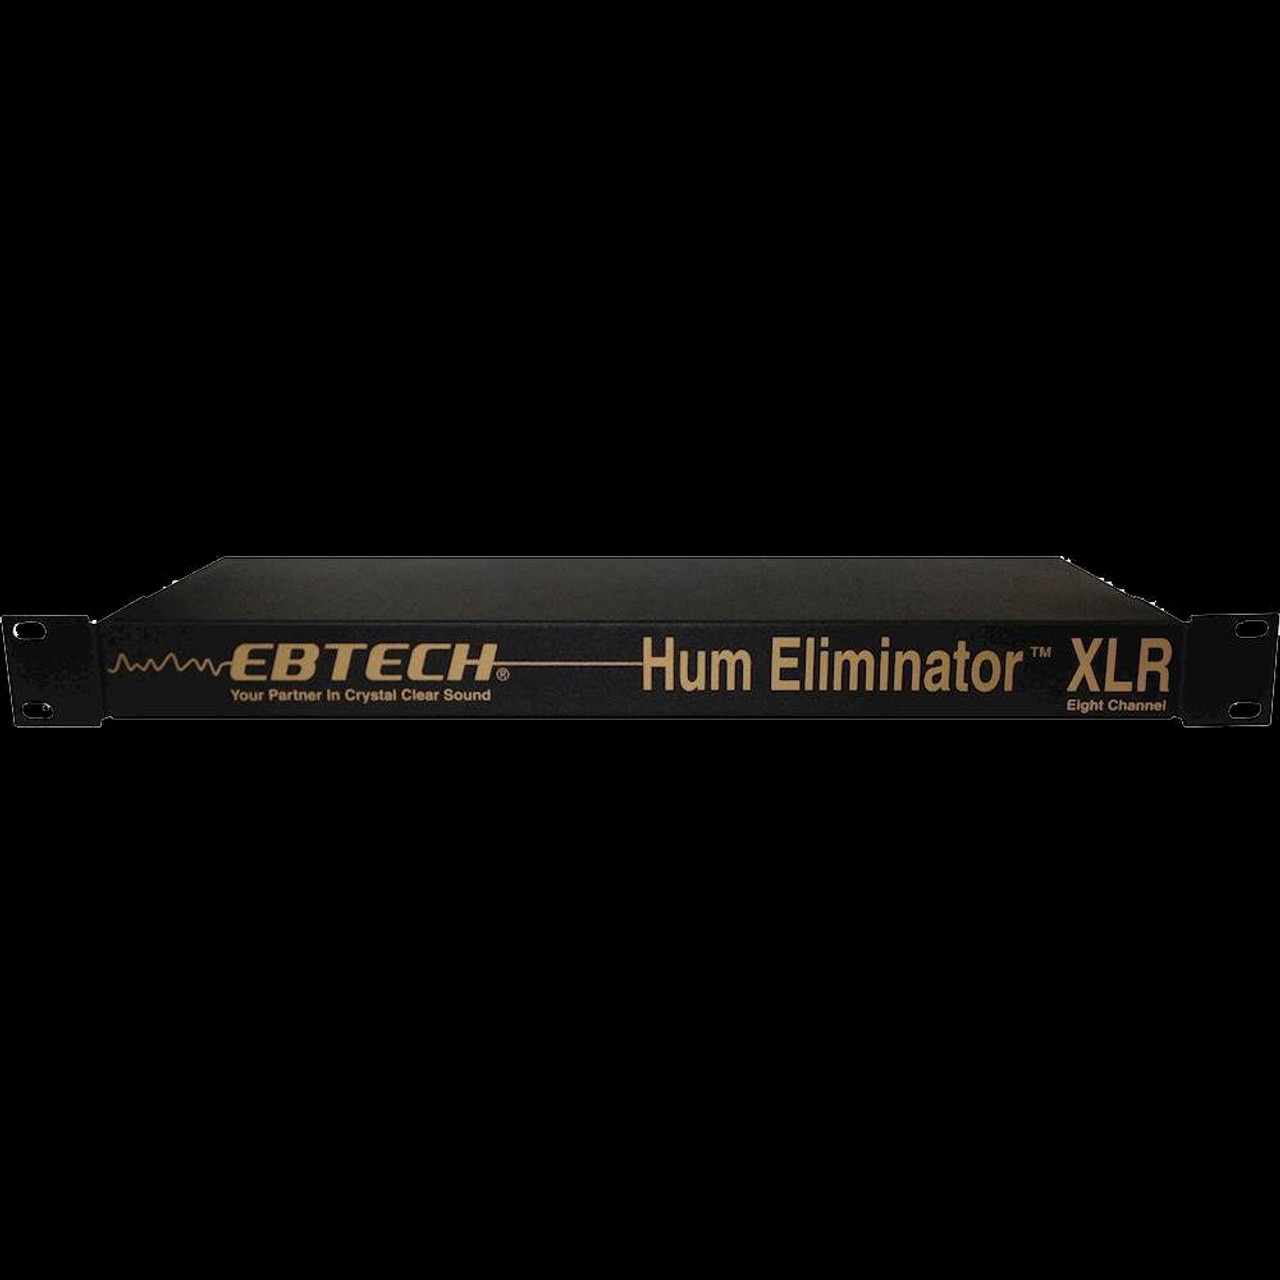 EBTECH Hum Eliminator 8 Channel With XLR Connectors / Rackmount